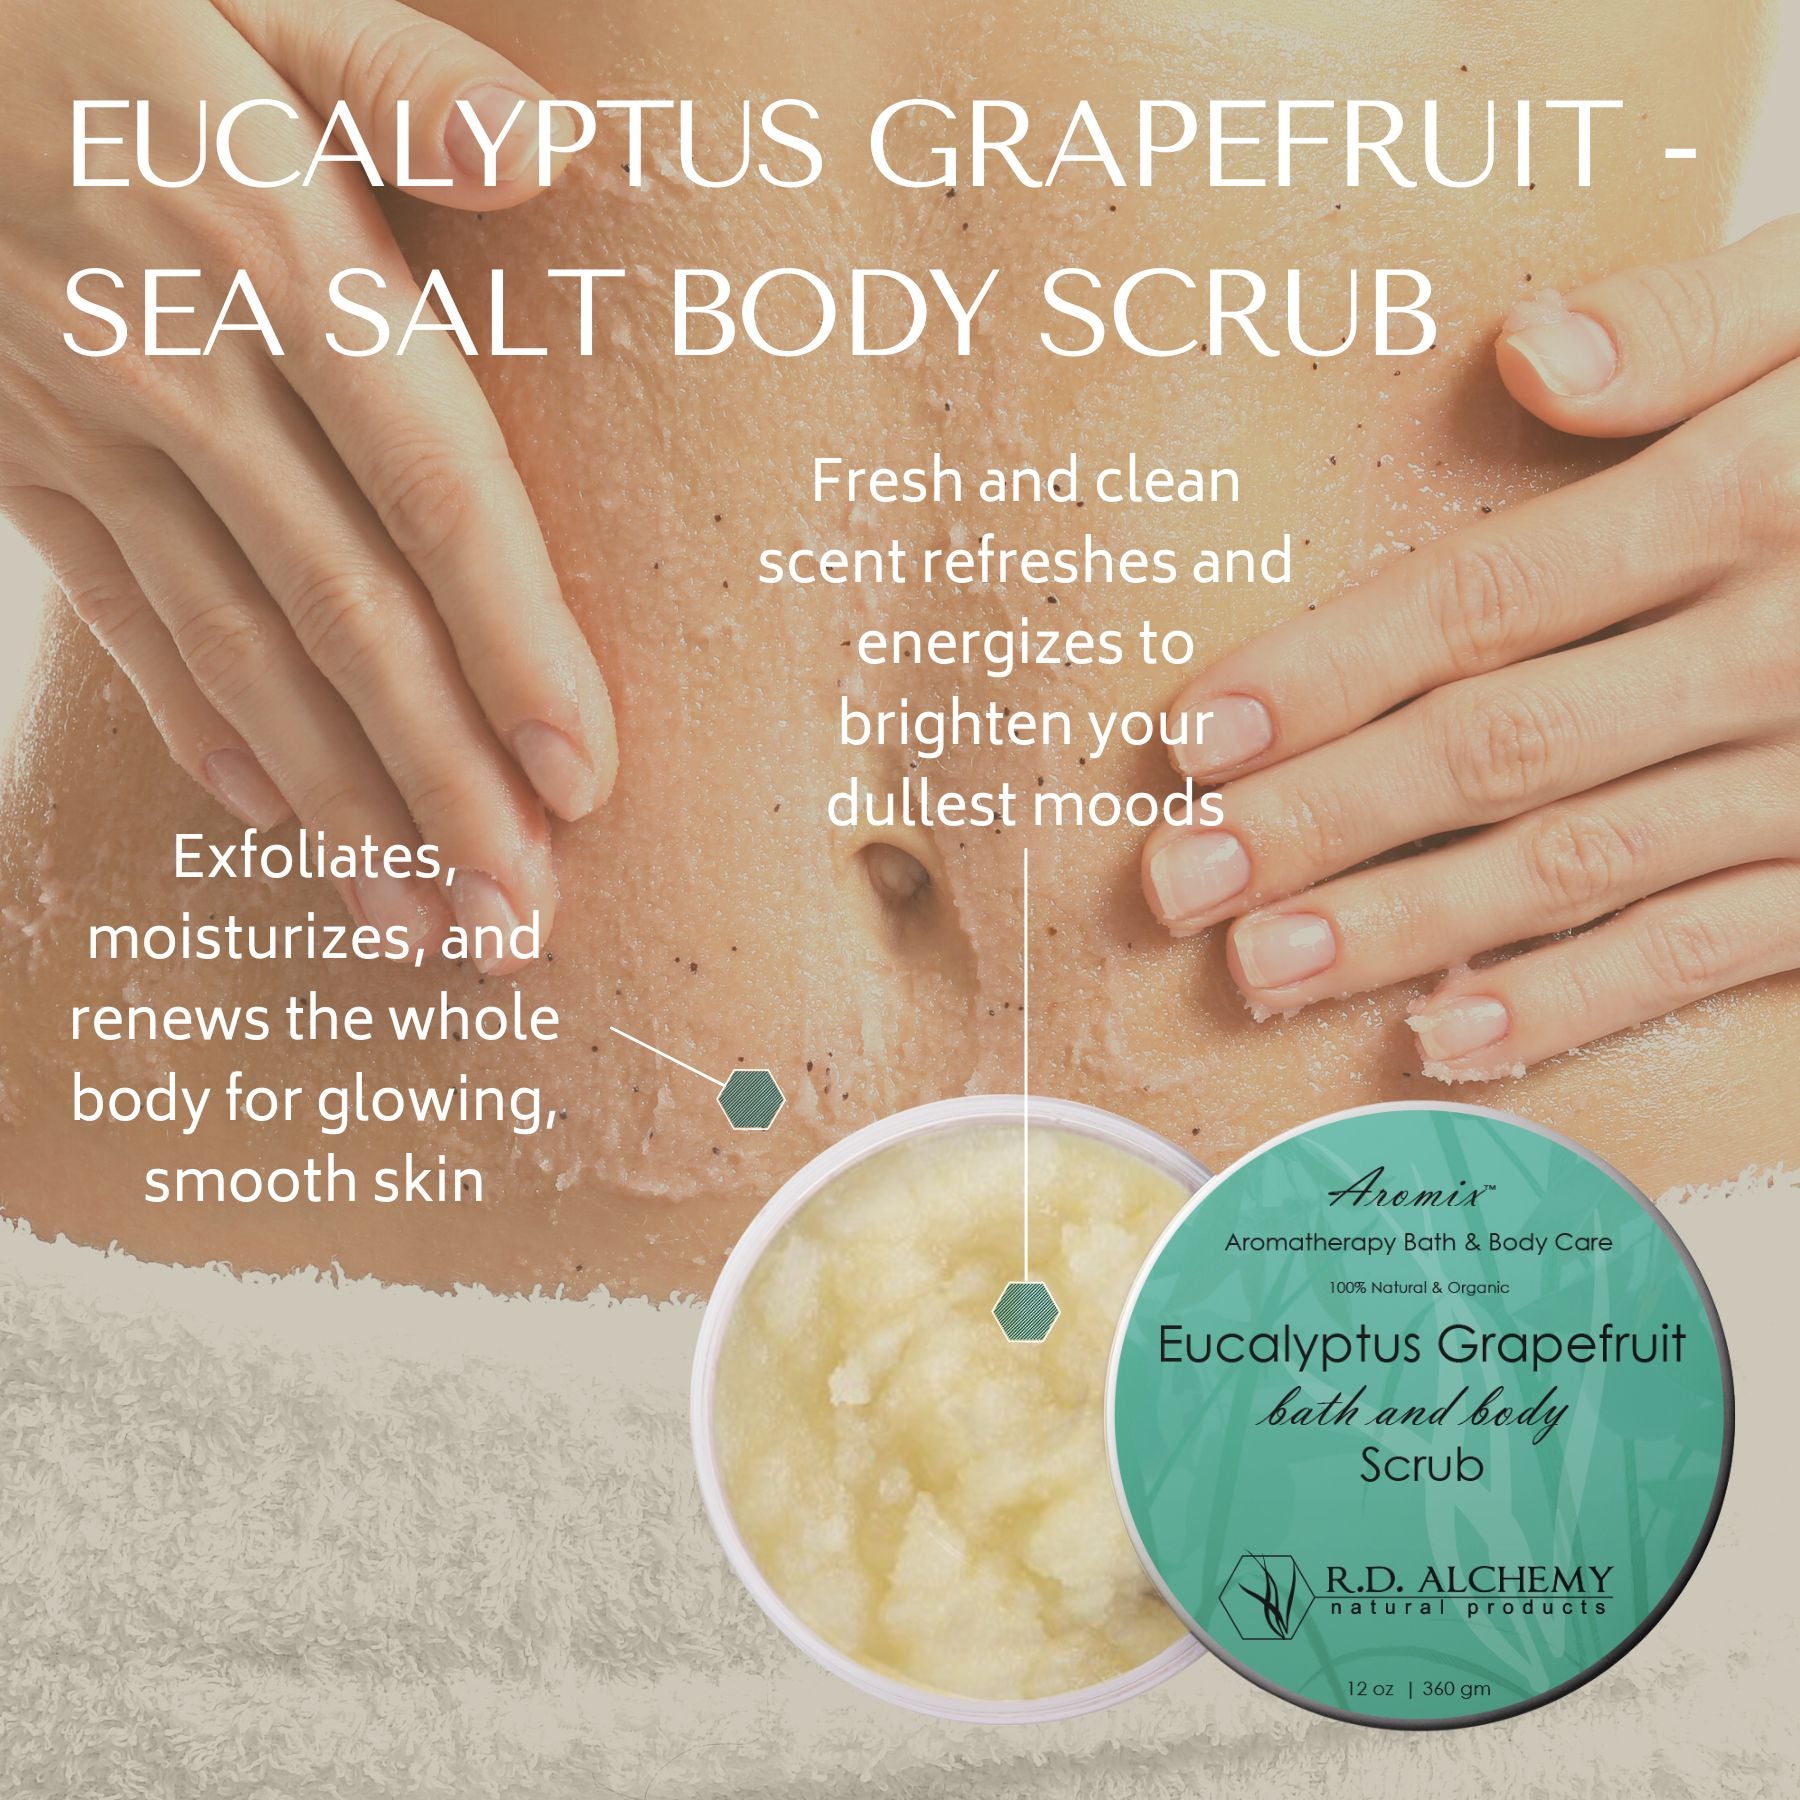 Eucalyptus Grapefruit - Sea Salt Body Scrub